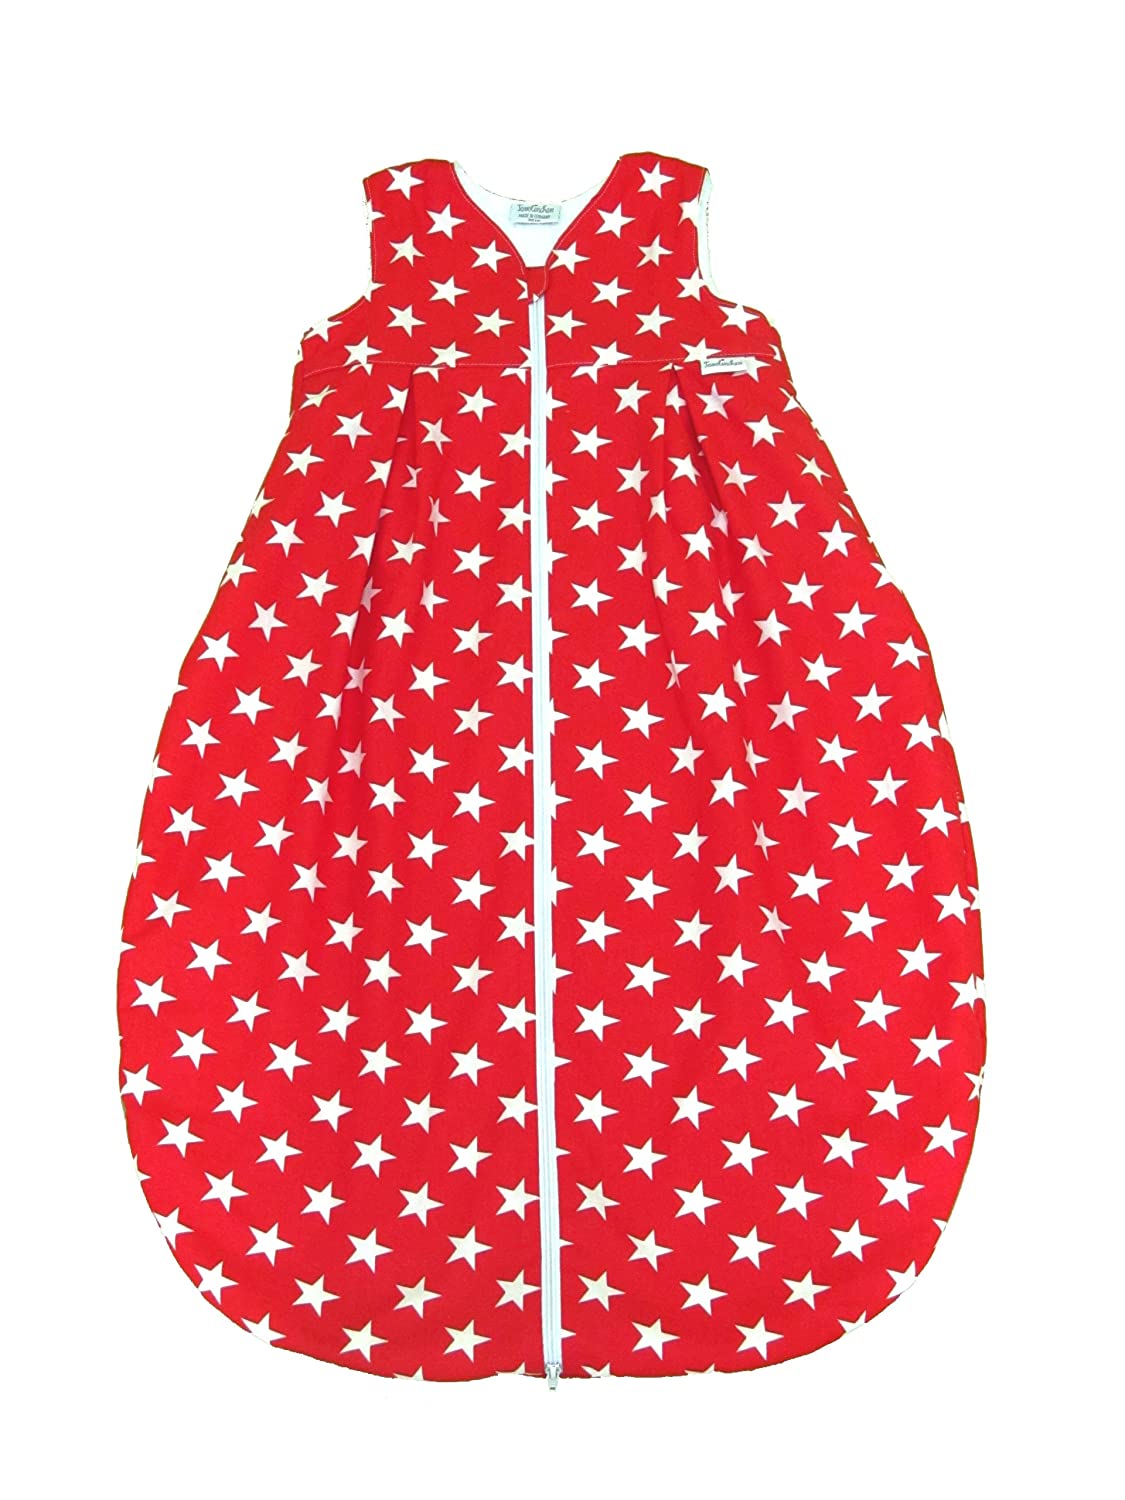 Tavolinchen 35/40 – Terry Cloth 90 cm Sleeping Bag with Stars Design Red